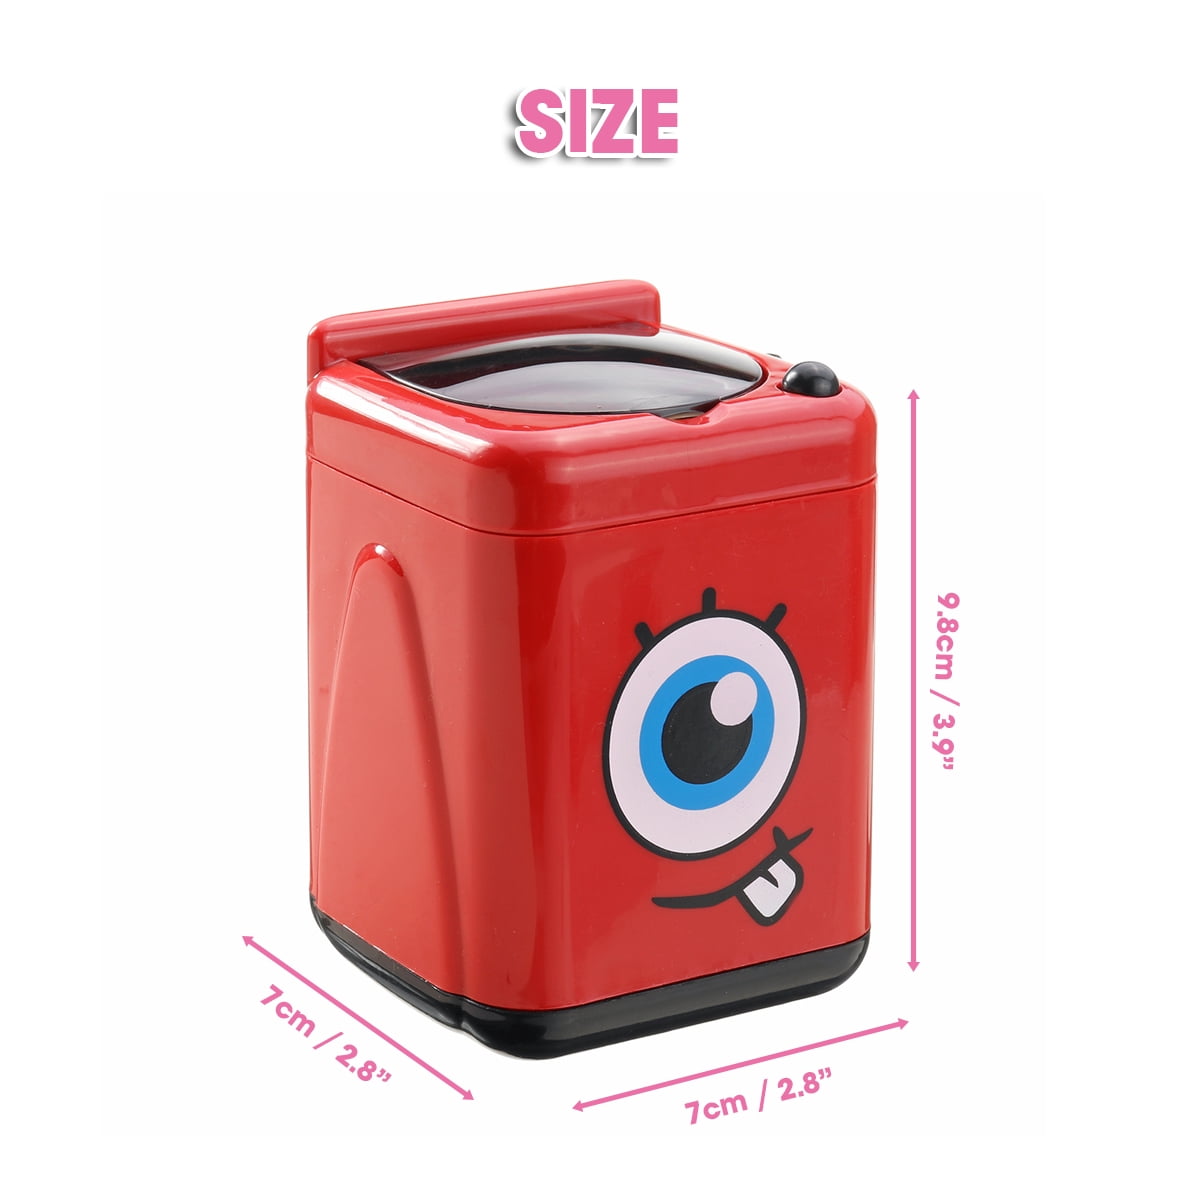 tiny toy washing machine